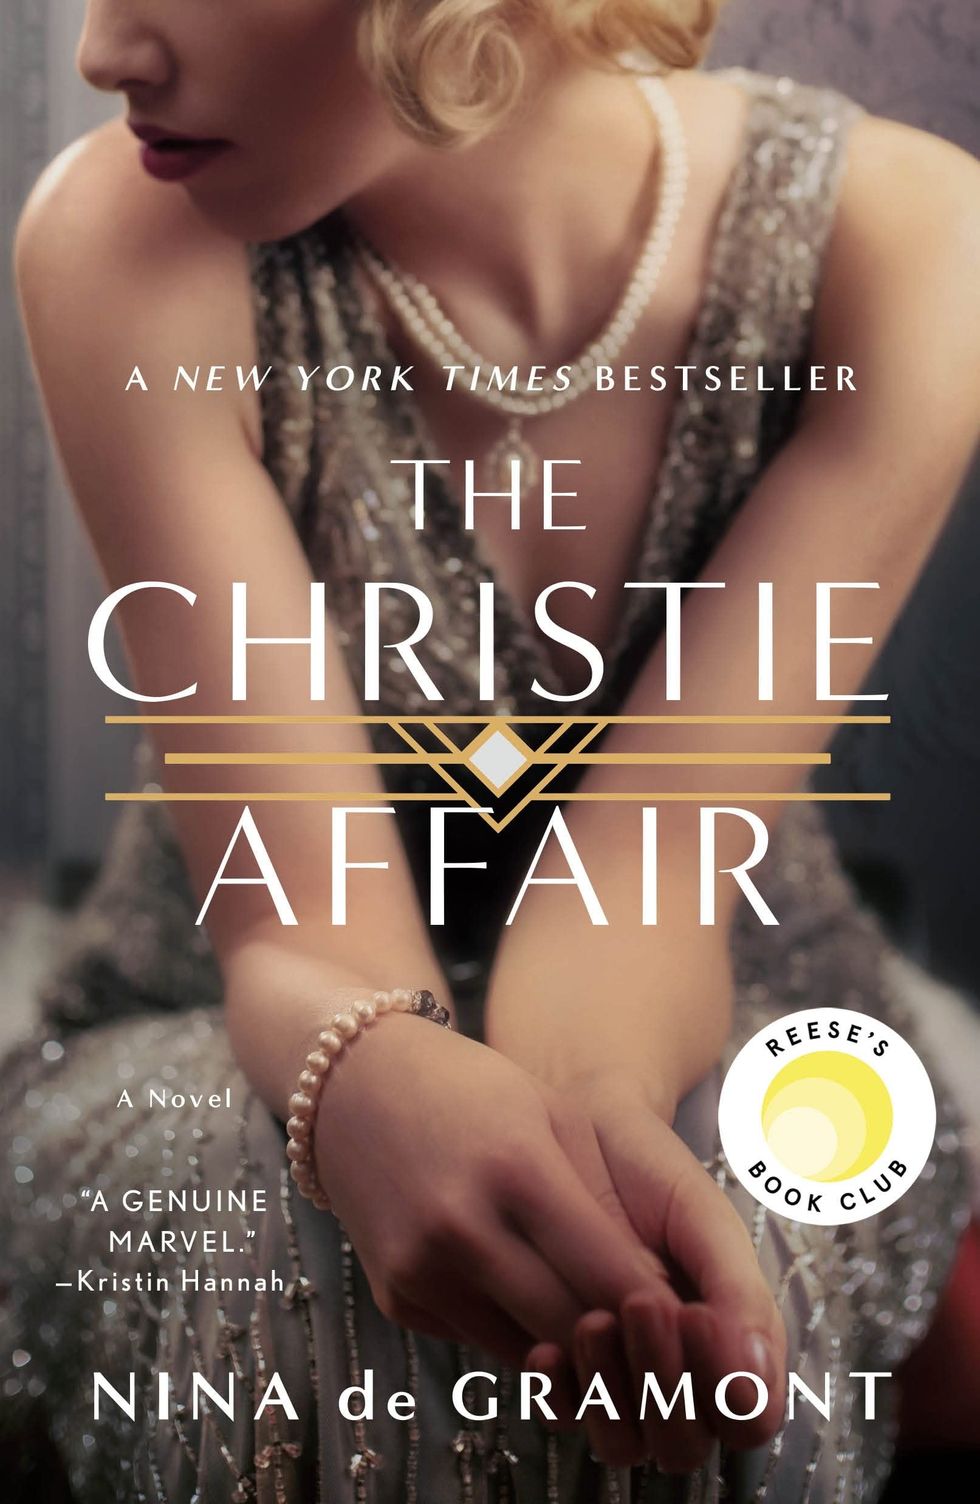 "The Christie Affair" by Nina de Gramont